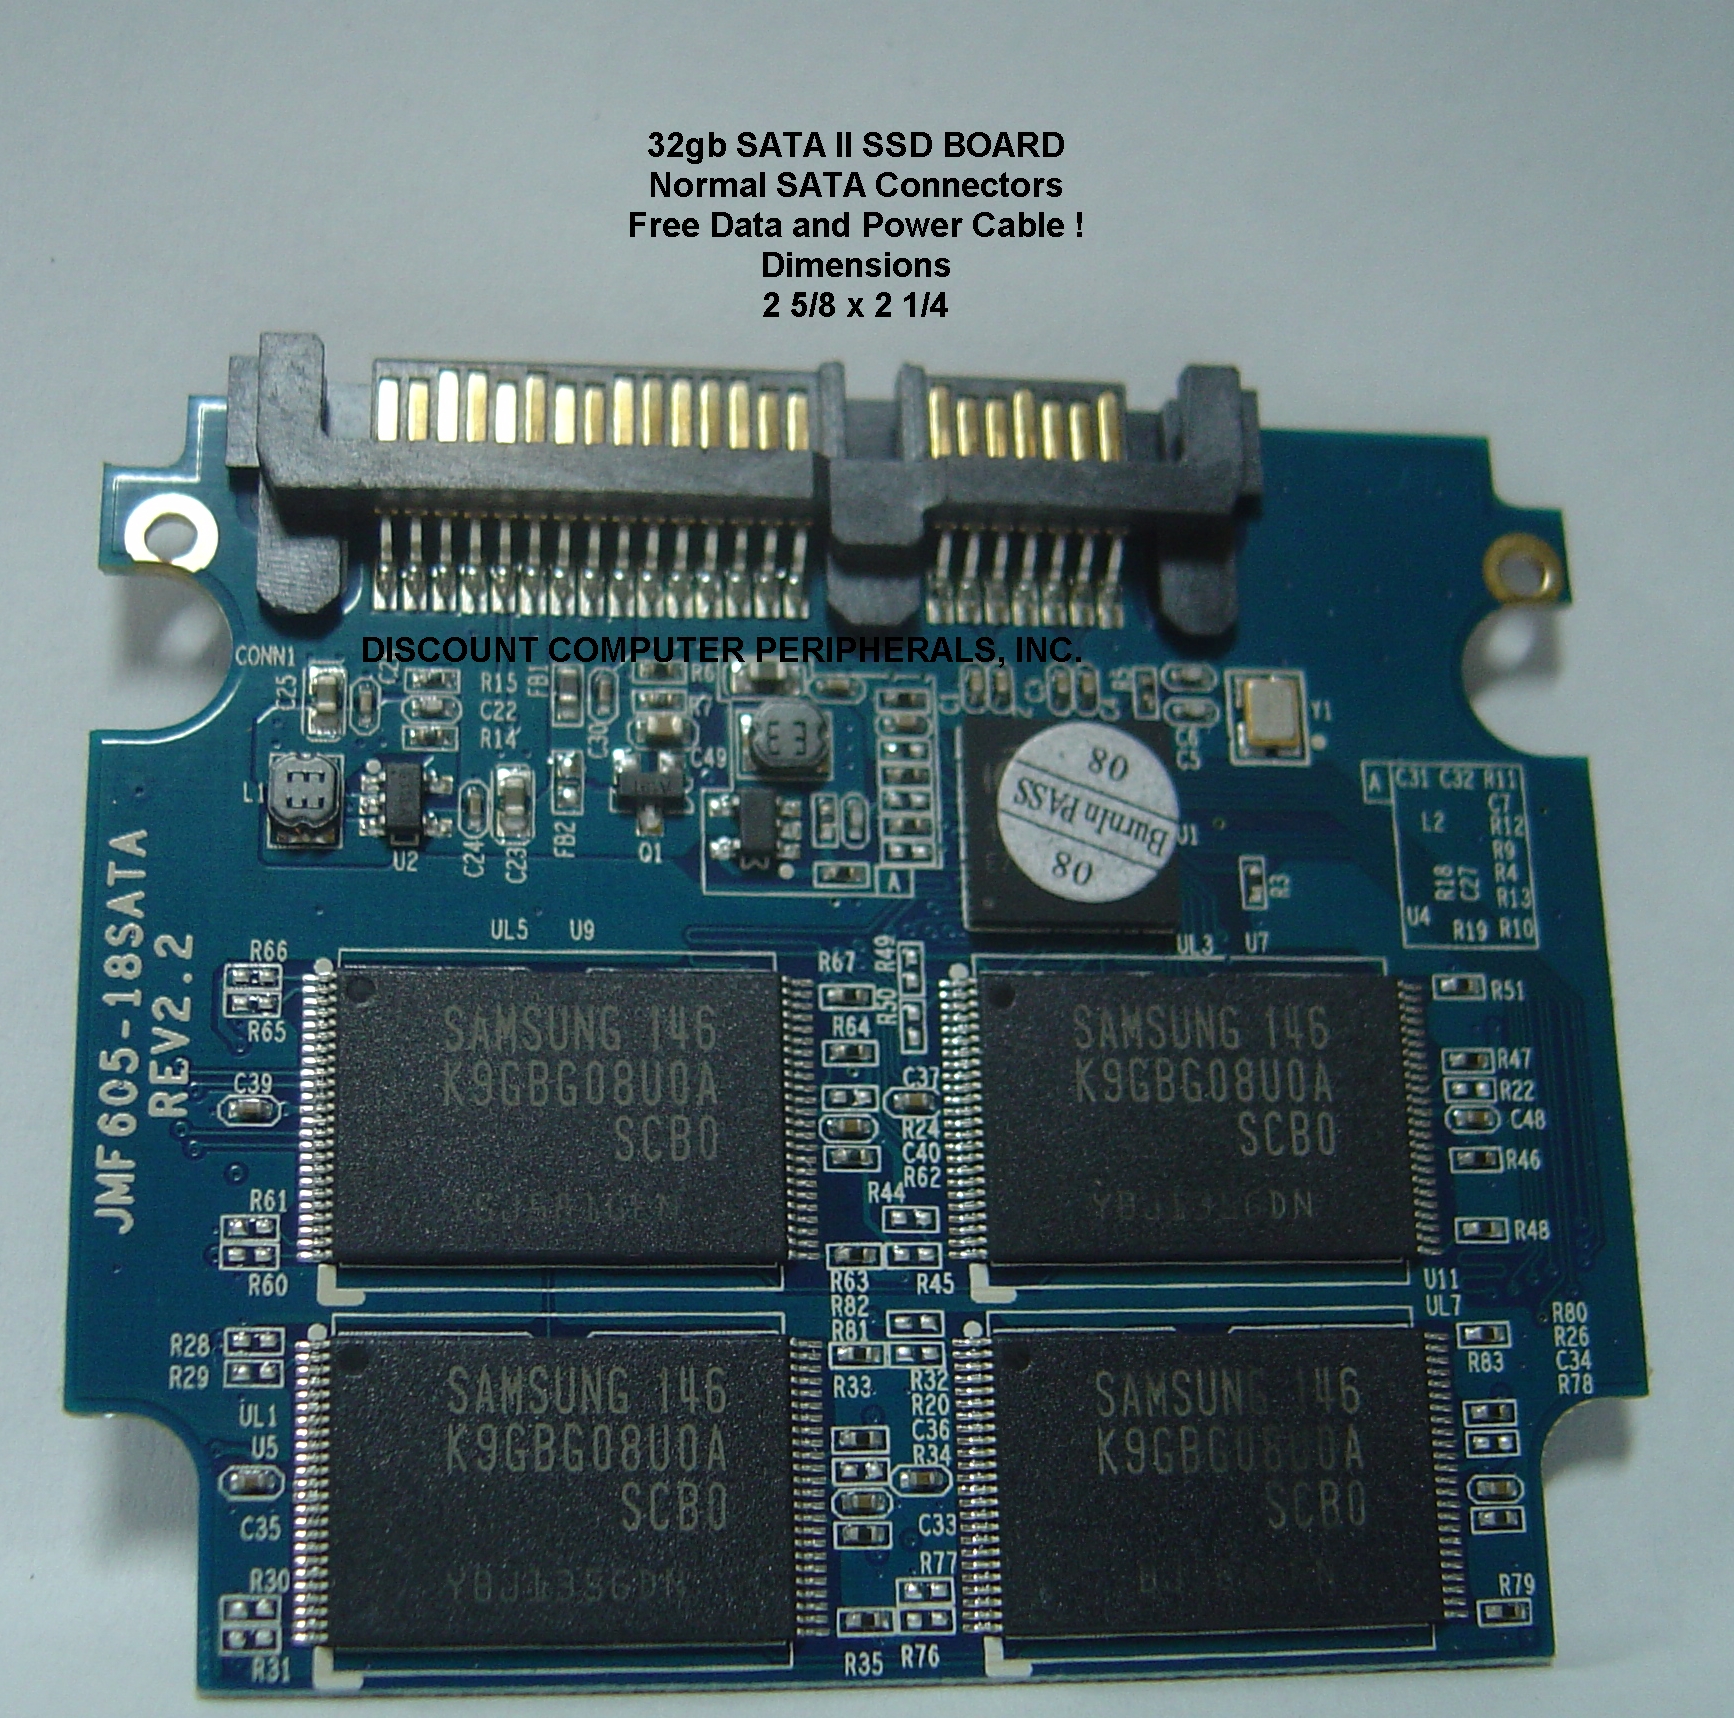 JMICRON JMF605-18SATA - 32GB SSD SATA II HALF SIZE 1.8IN Board -